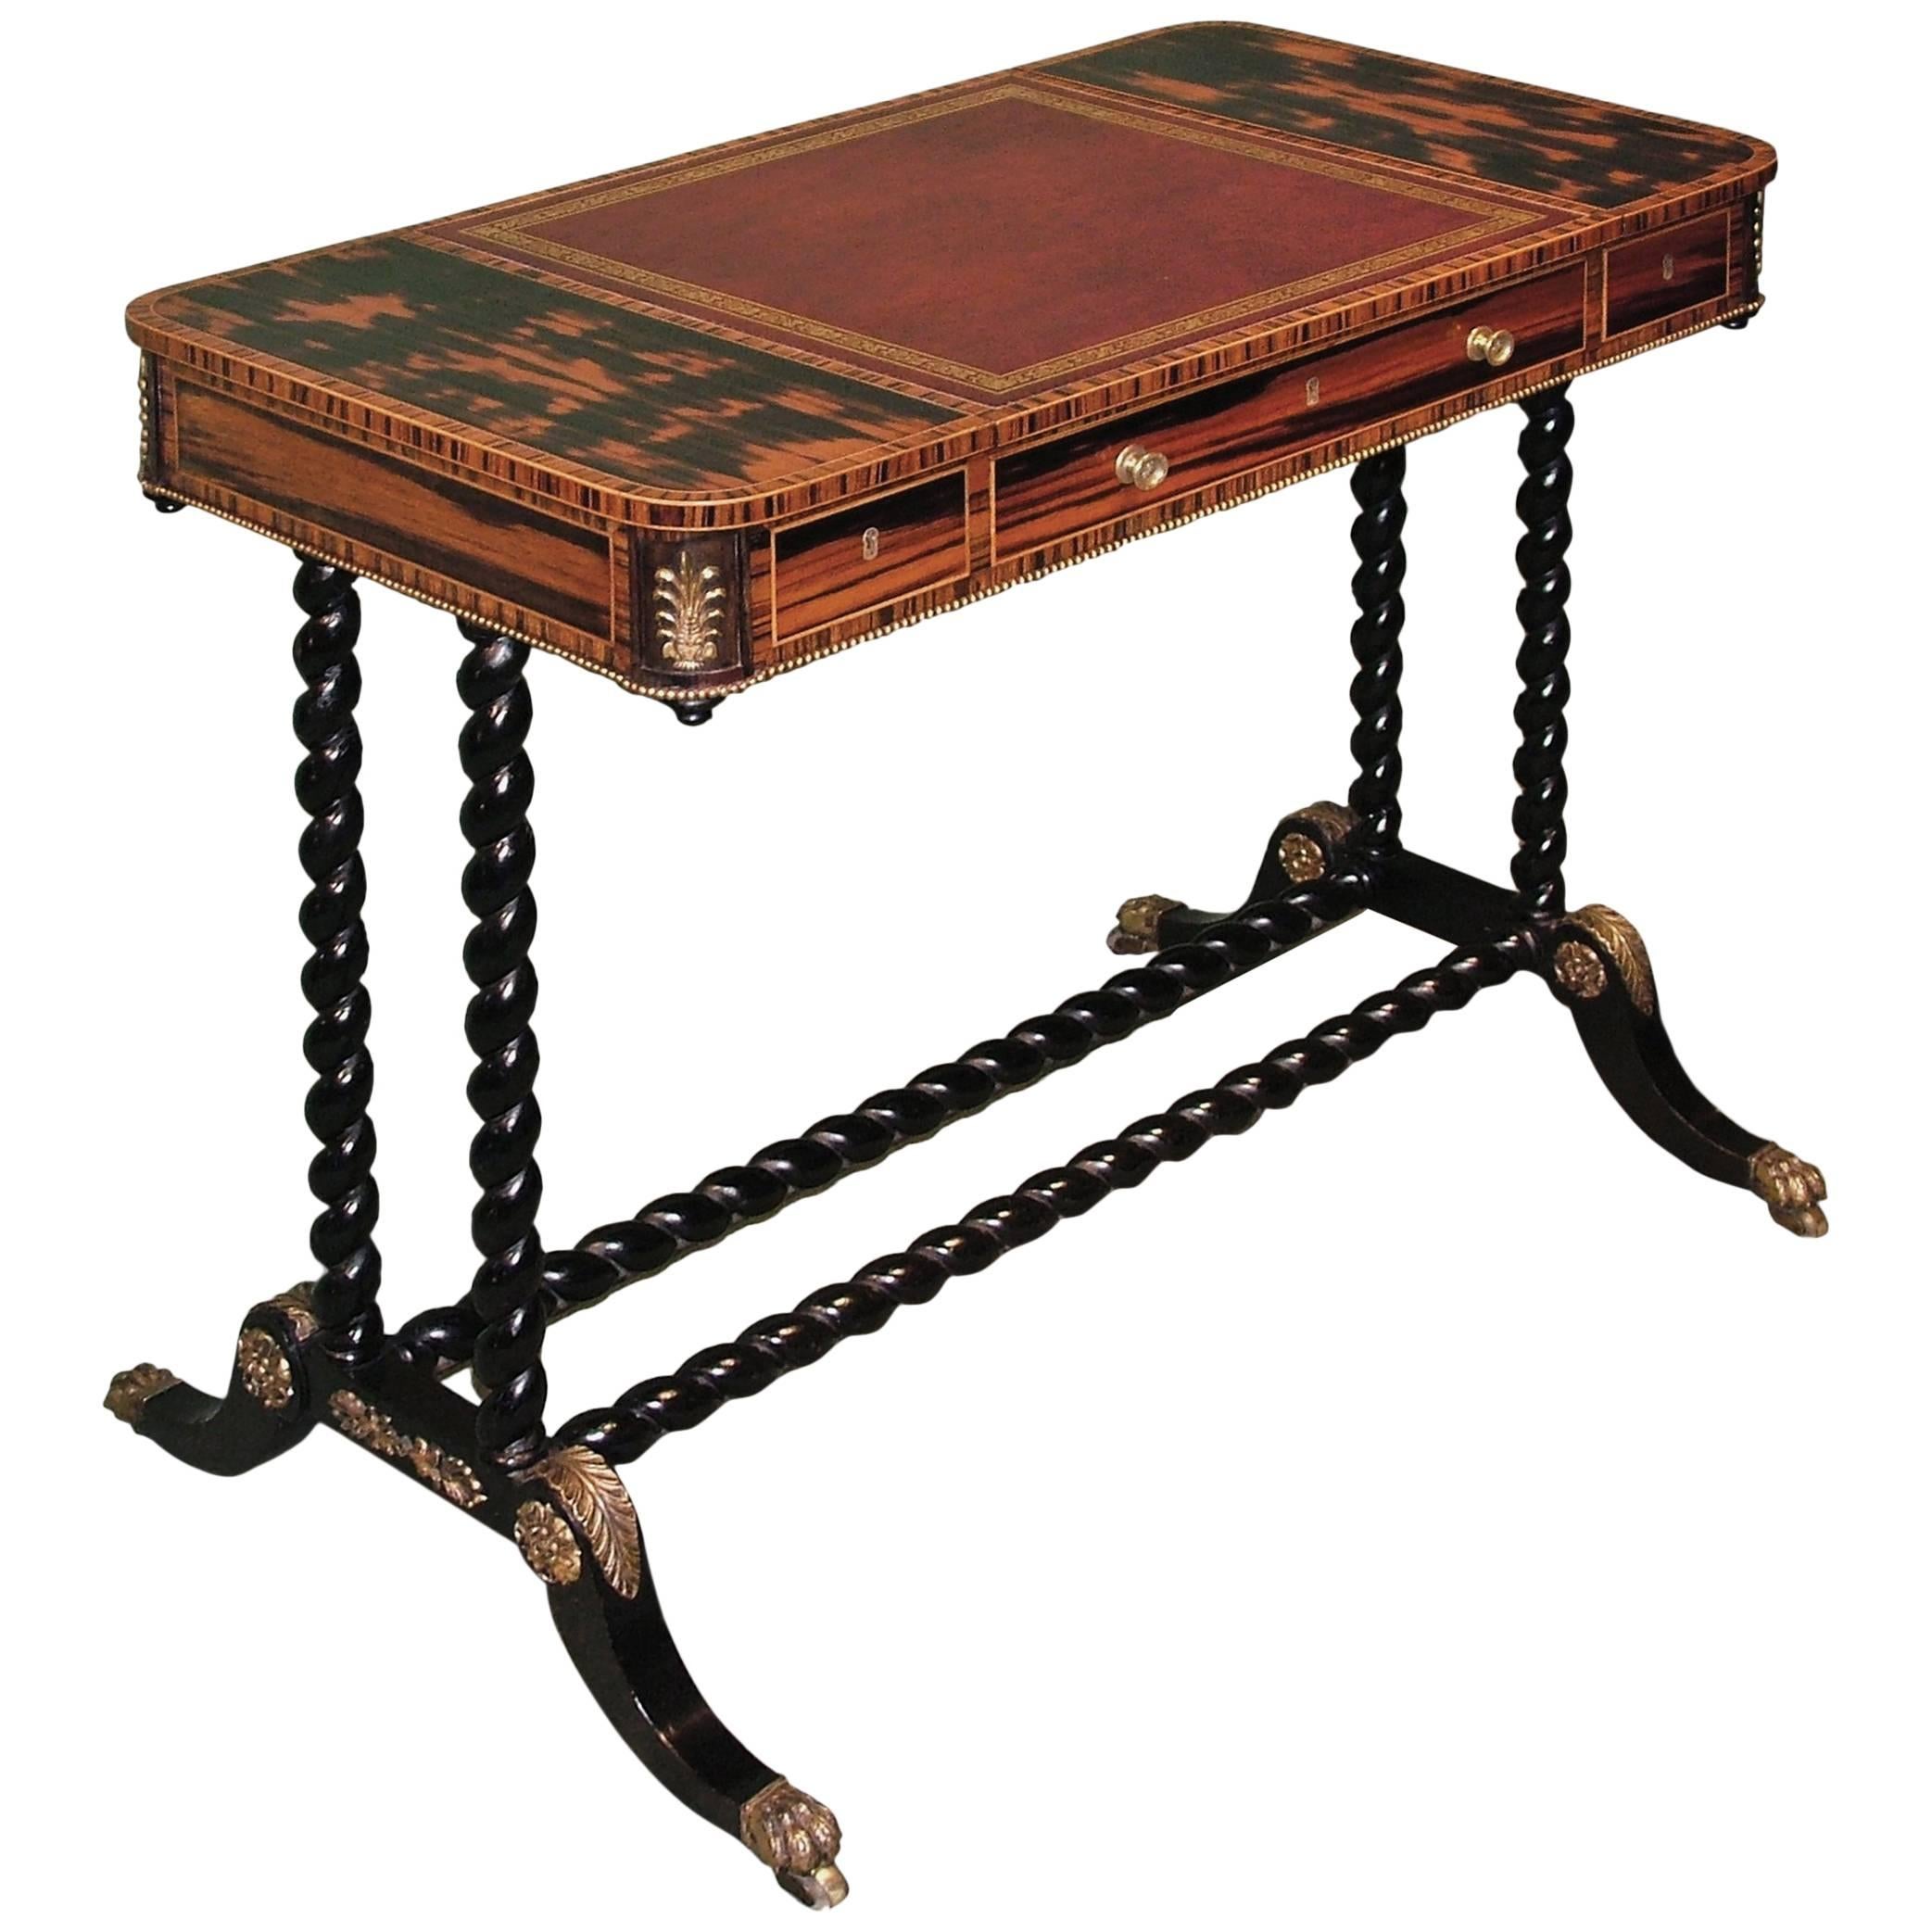 Regency period coromandel wood writing table